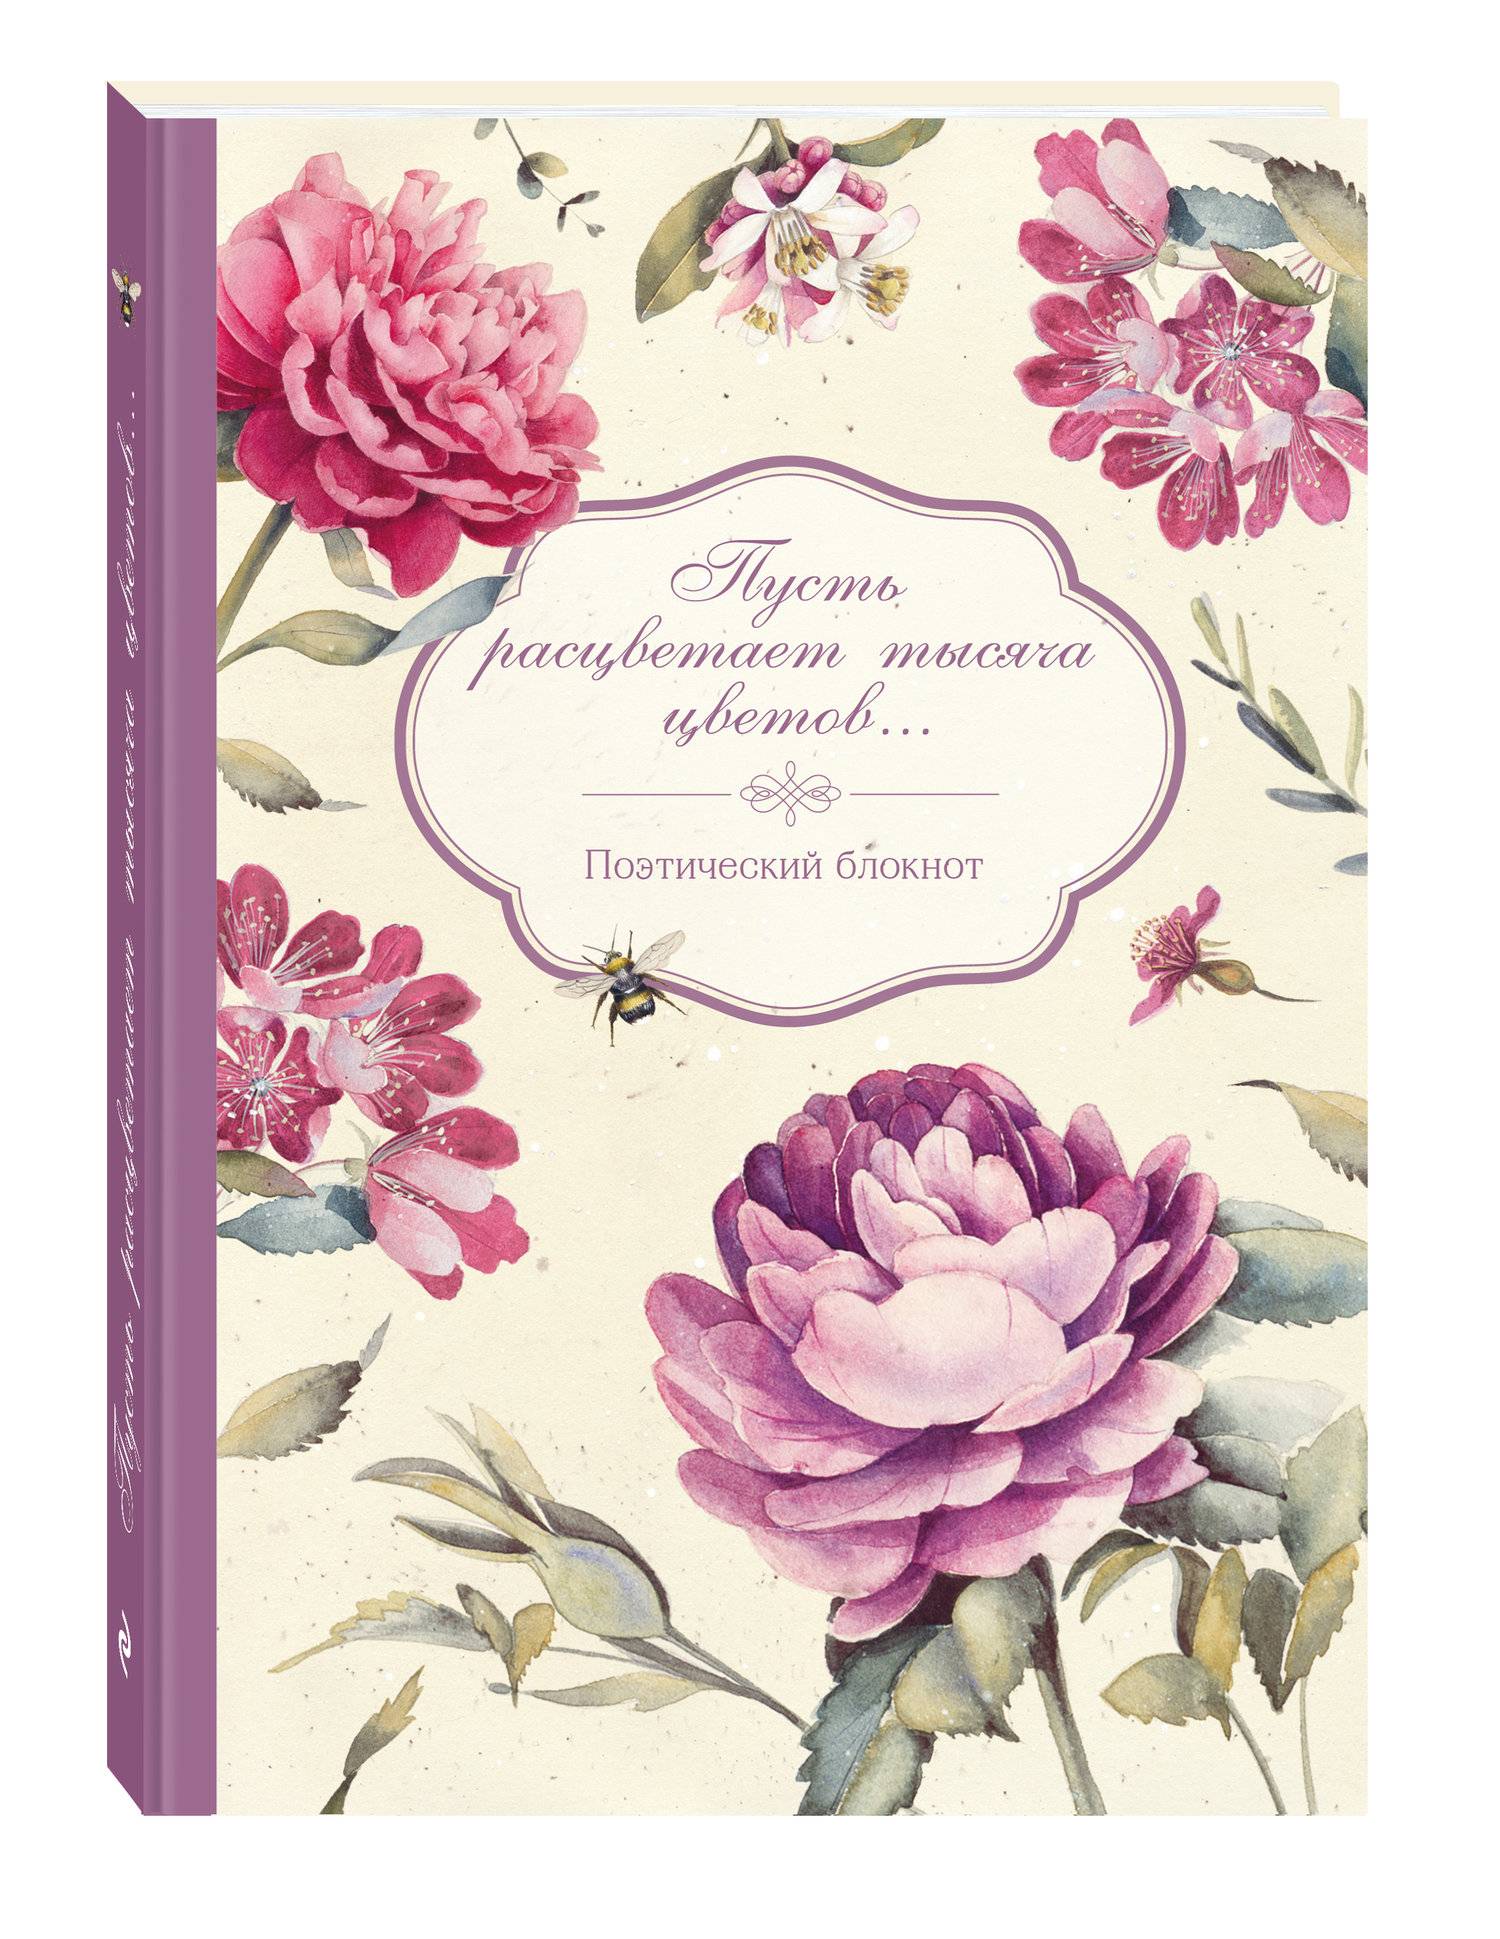 Обложка книги с цветами